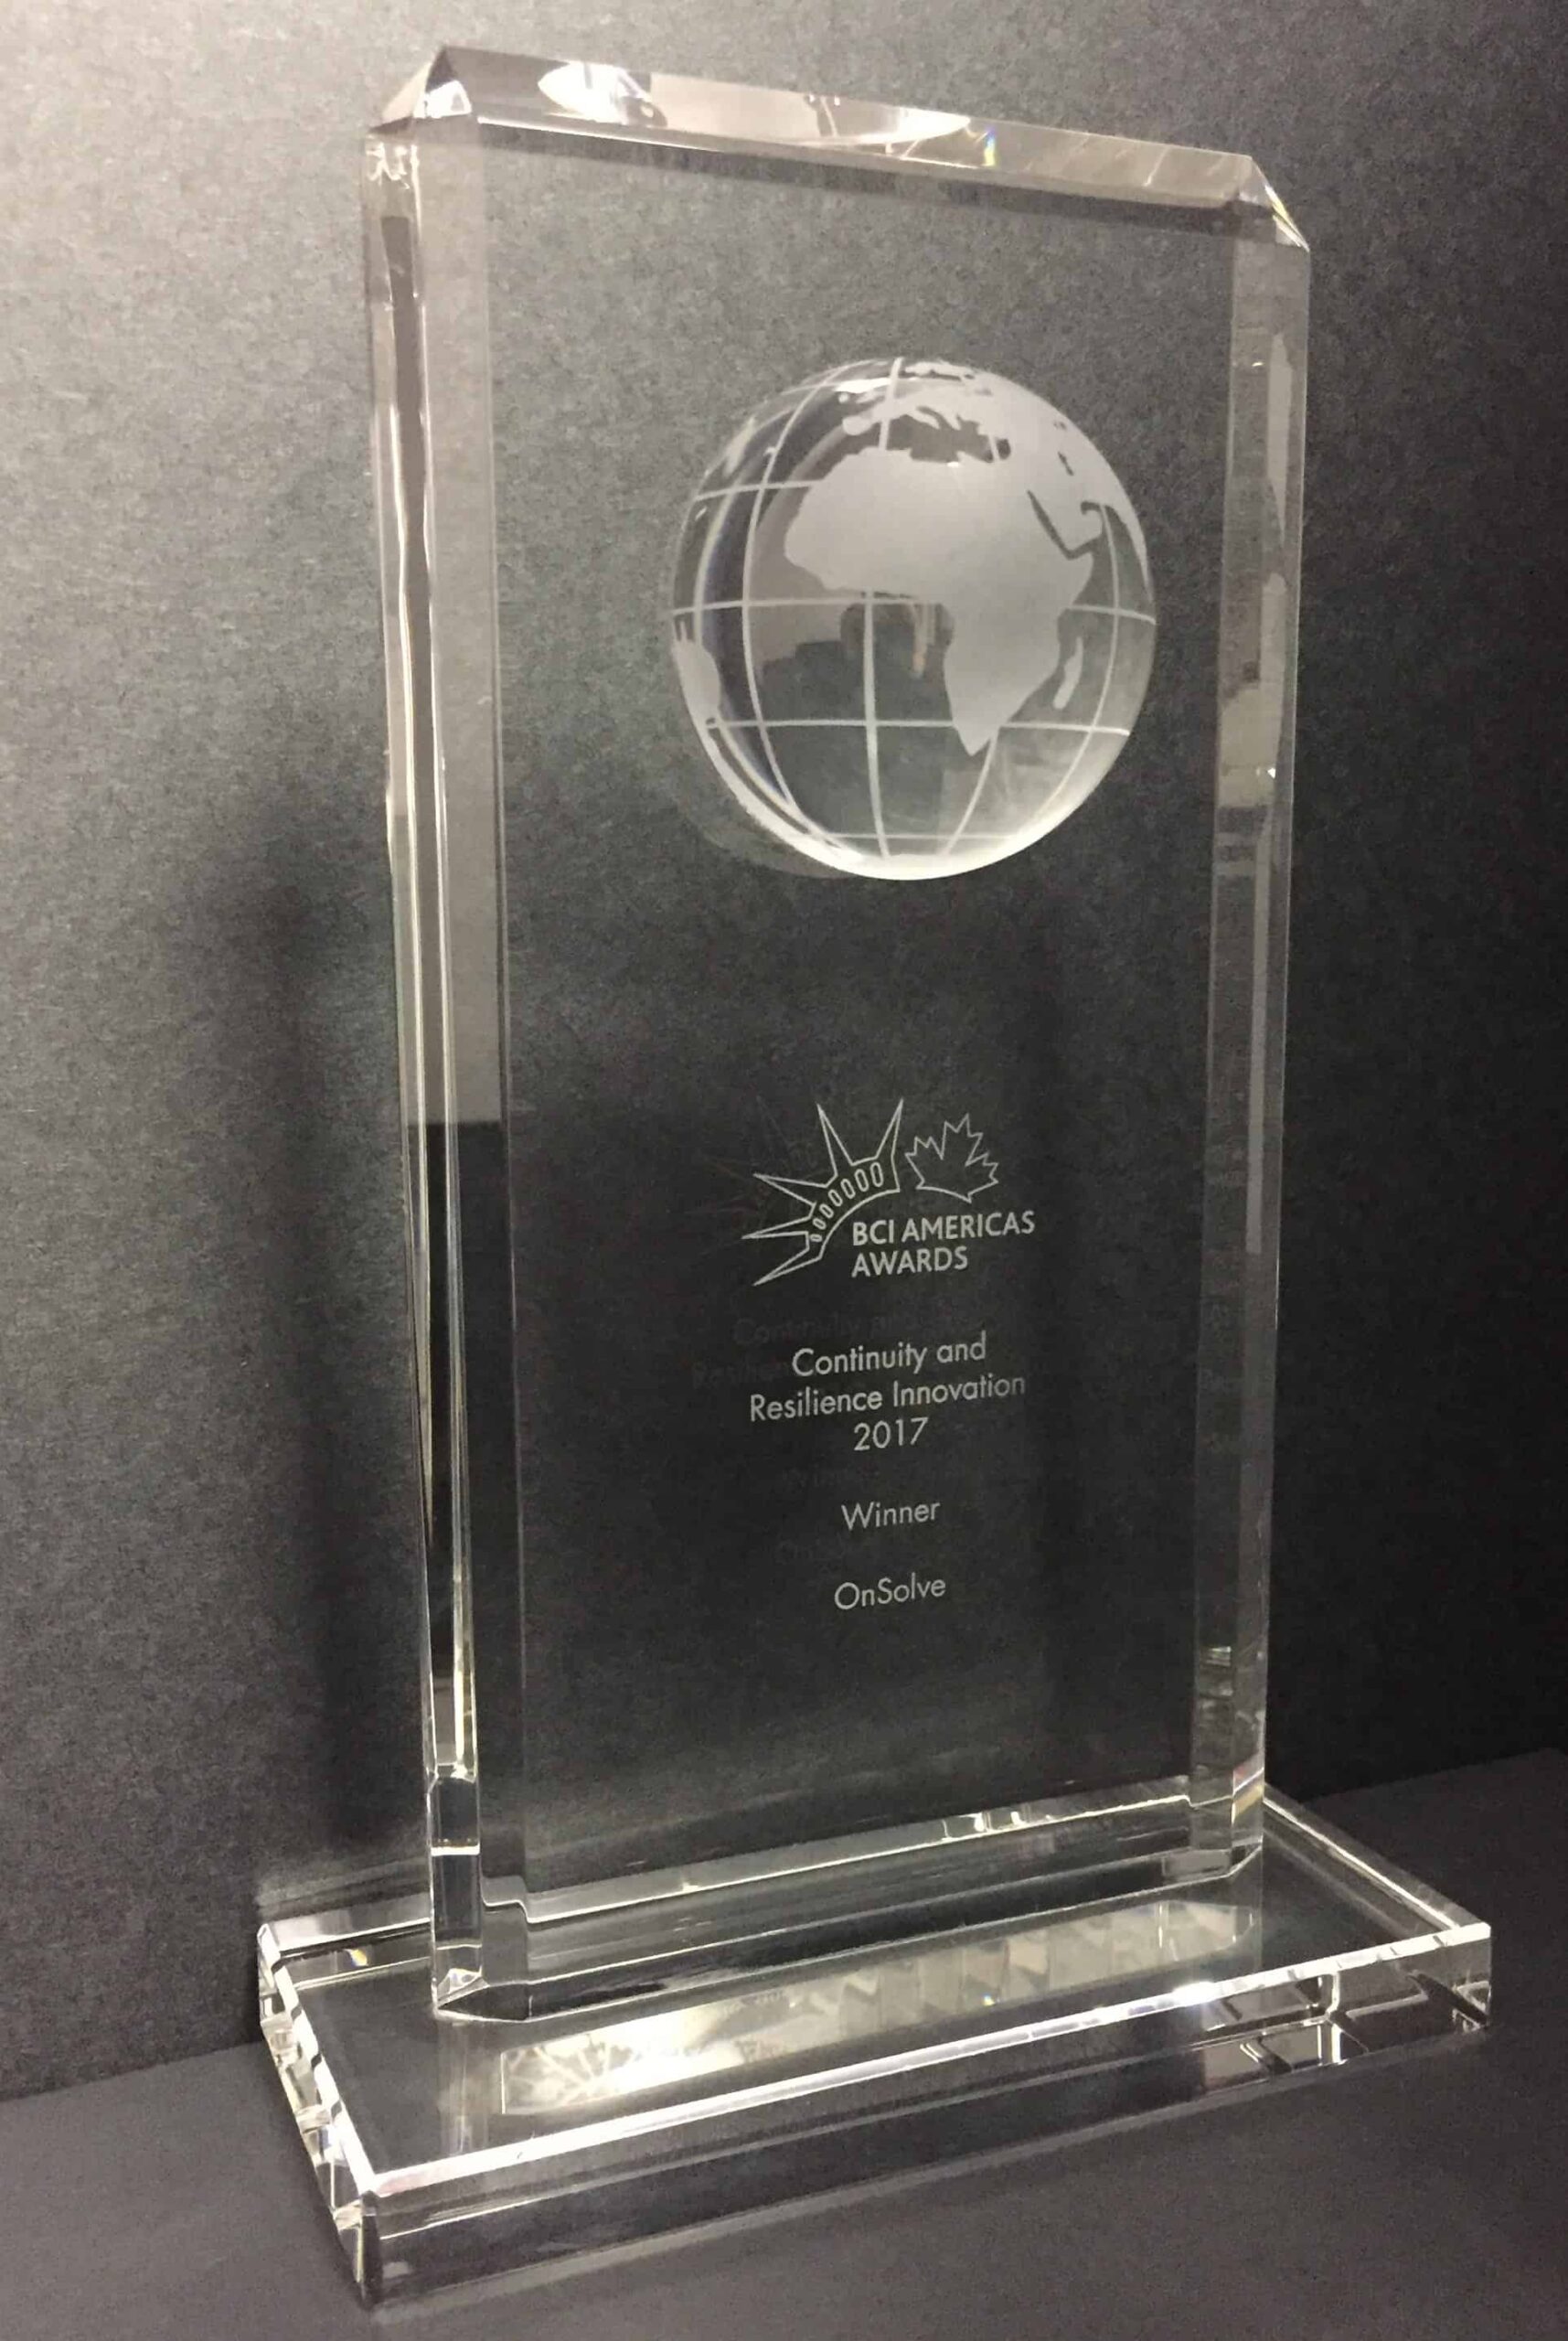 OnSolve Business Continuity Institute America's Award Winner 2017